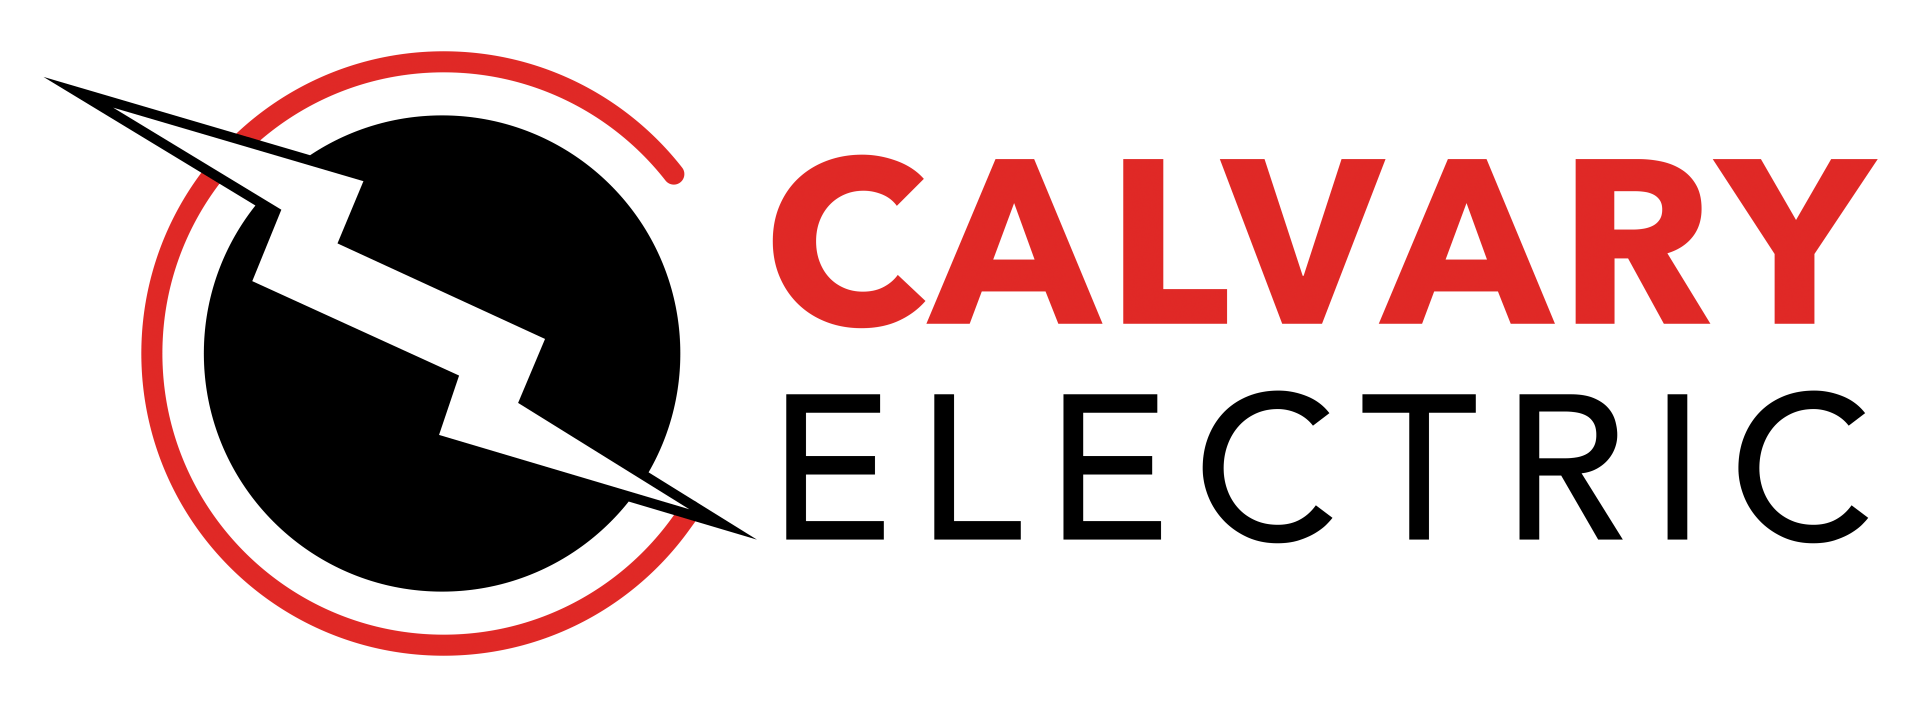 Electrician in York, PA | Calvary Electric LLC